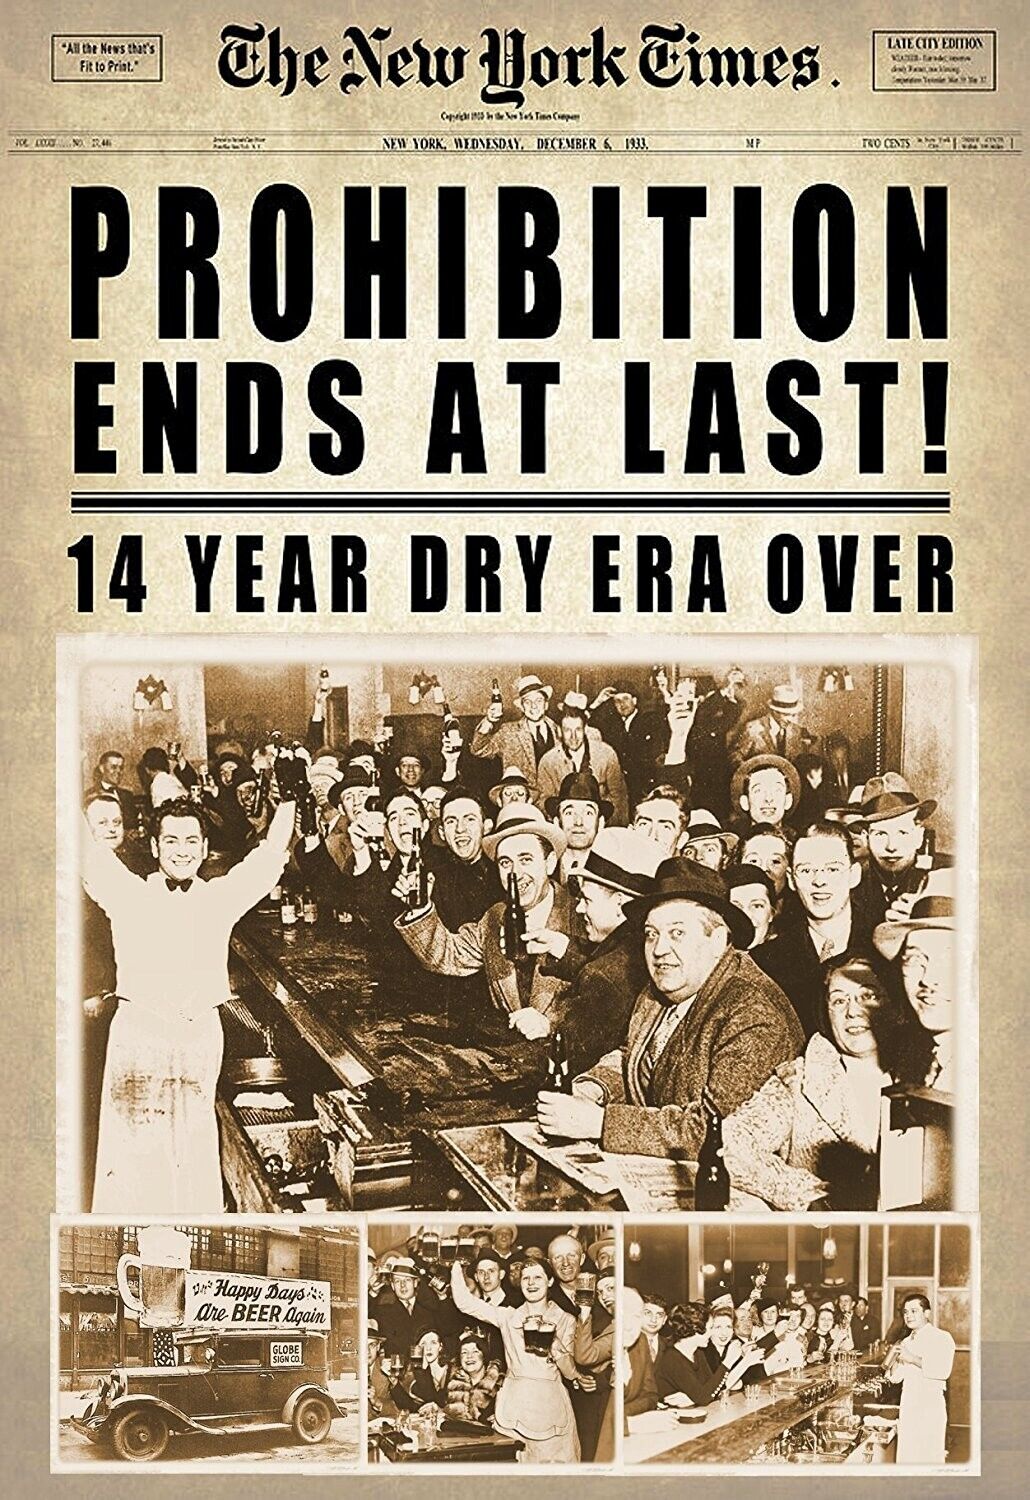 Set of 2 Vintage Prohibition End Newspaper Headlines Posters Print 12 x 18